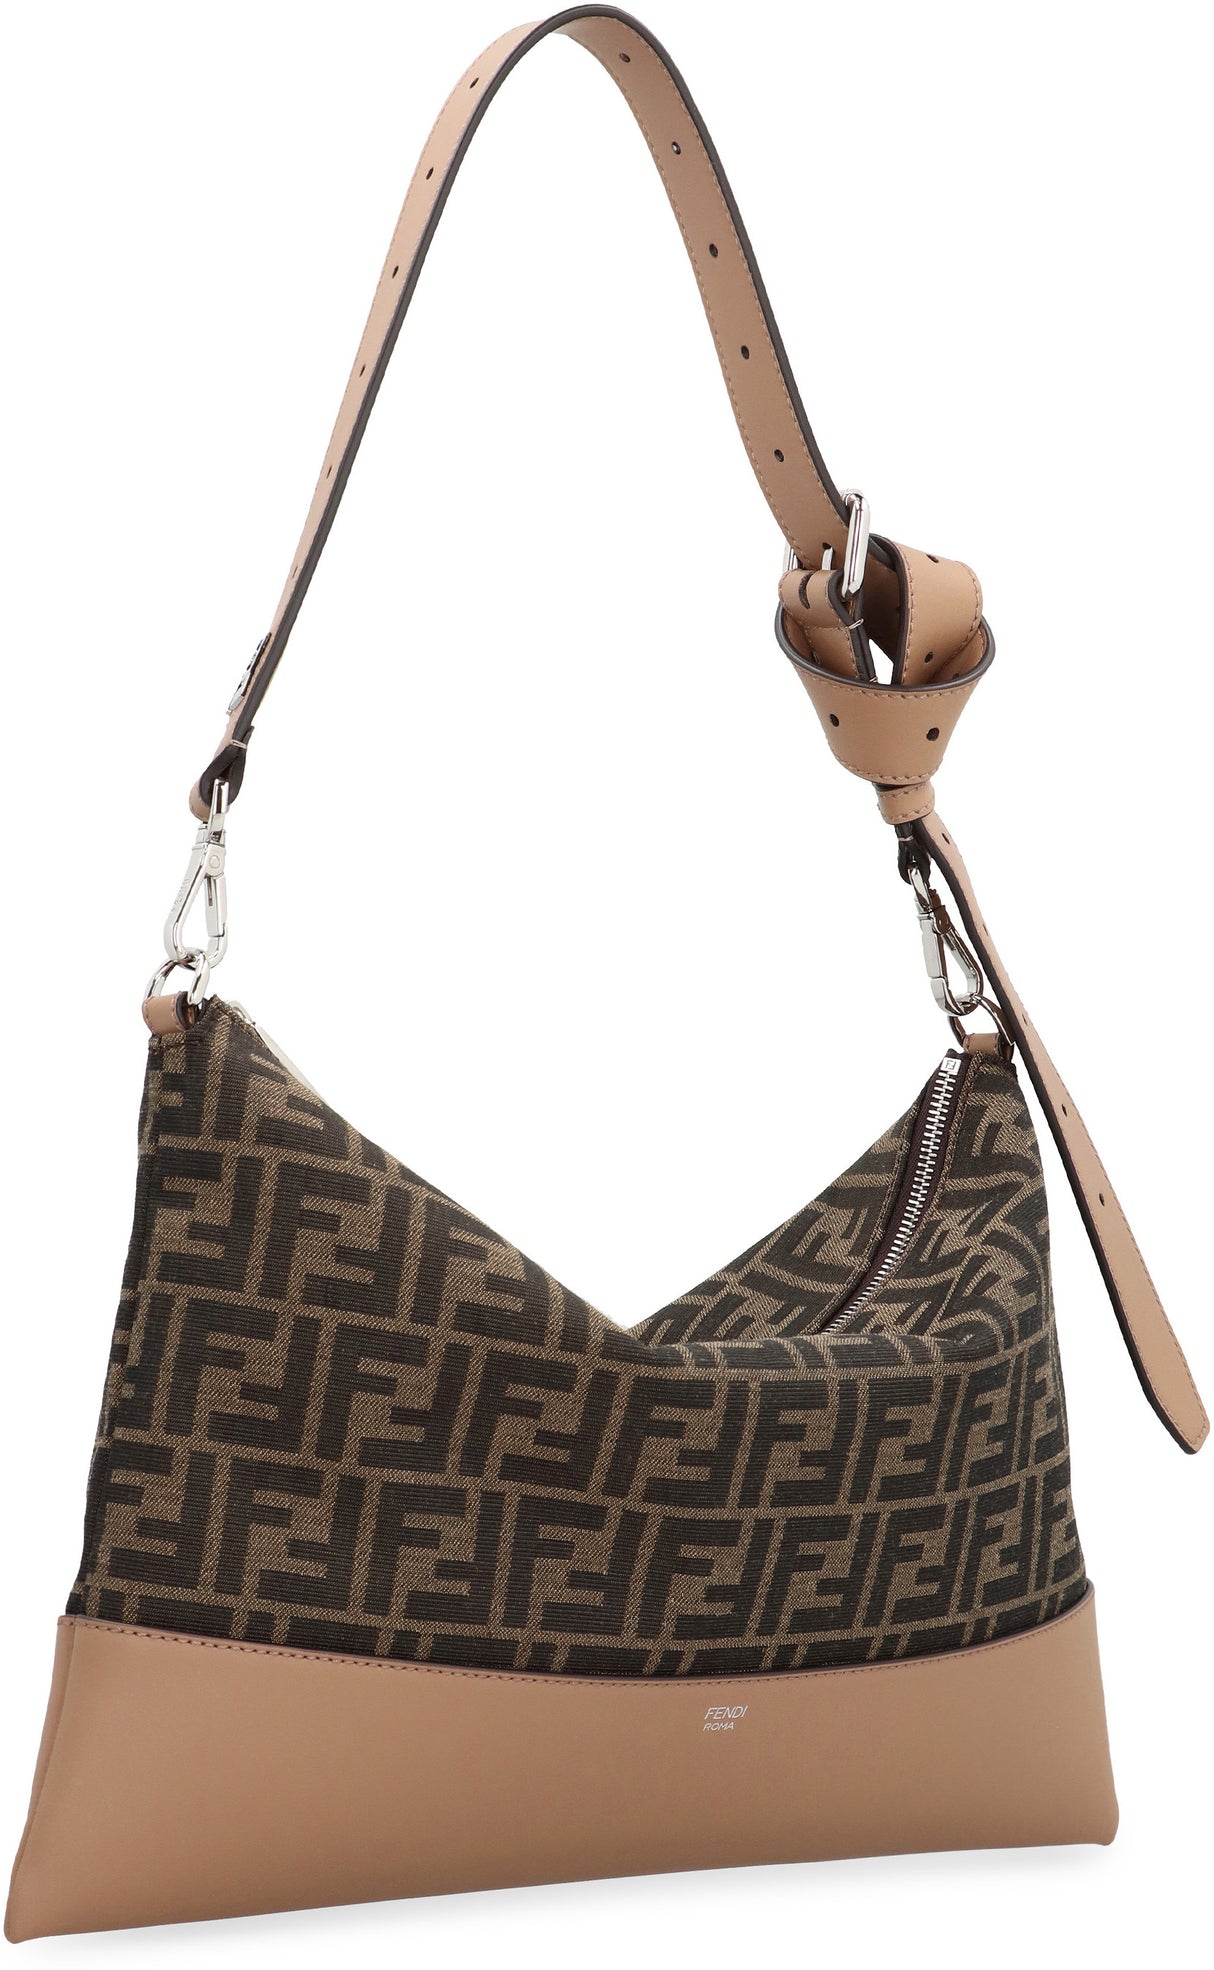 FENDI Beige Coated Canvas Crossbody Handbag with Leather Details